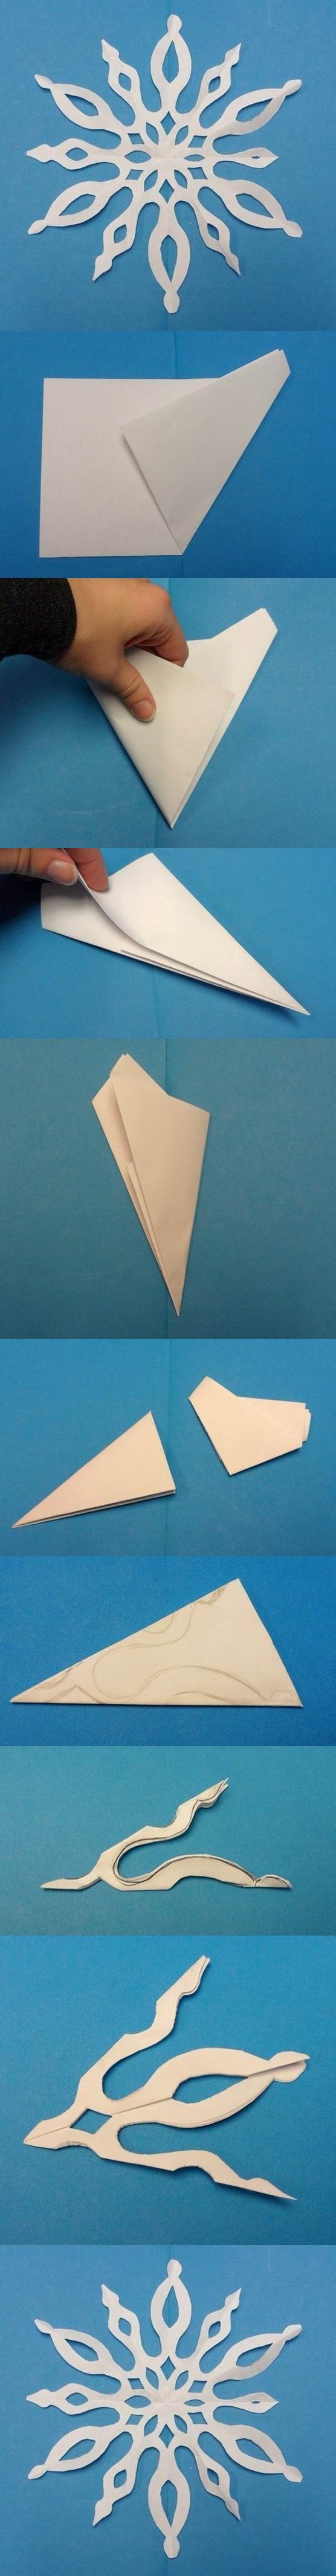 DIY Easy Paper Cut Snowflake